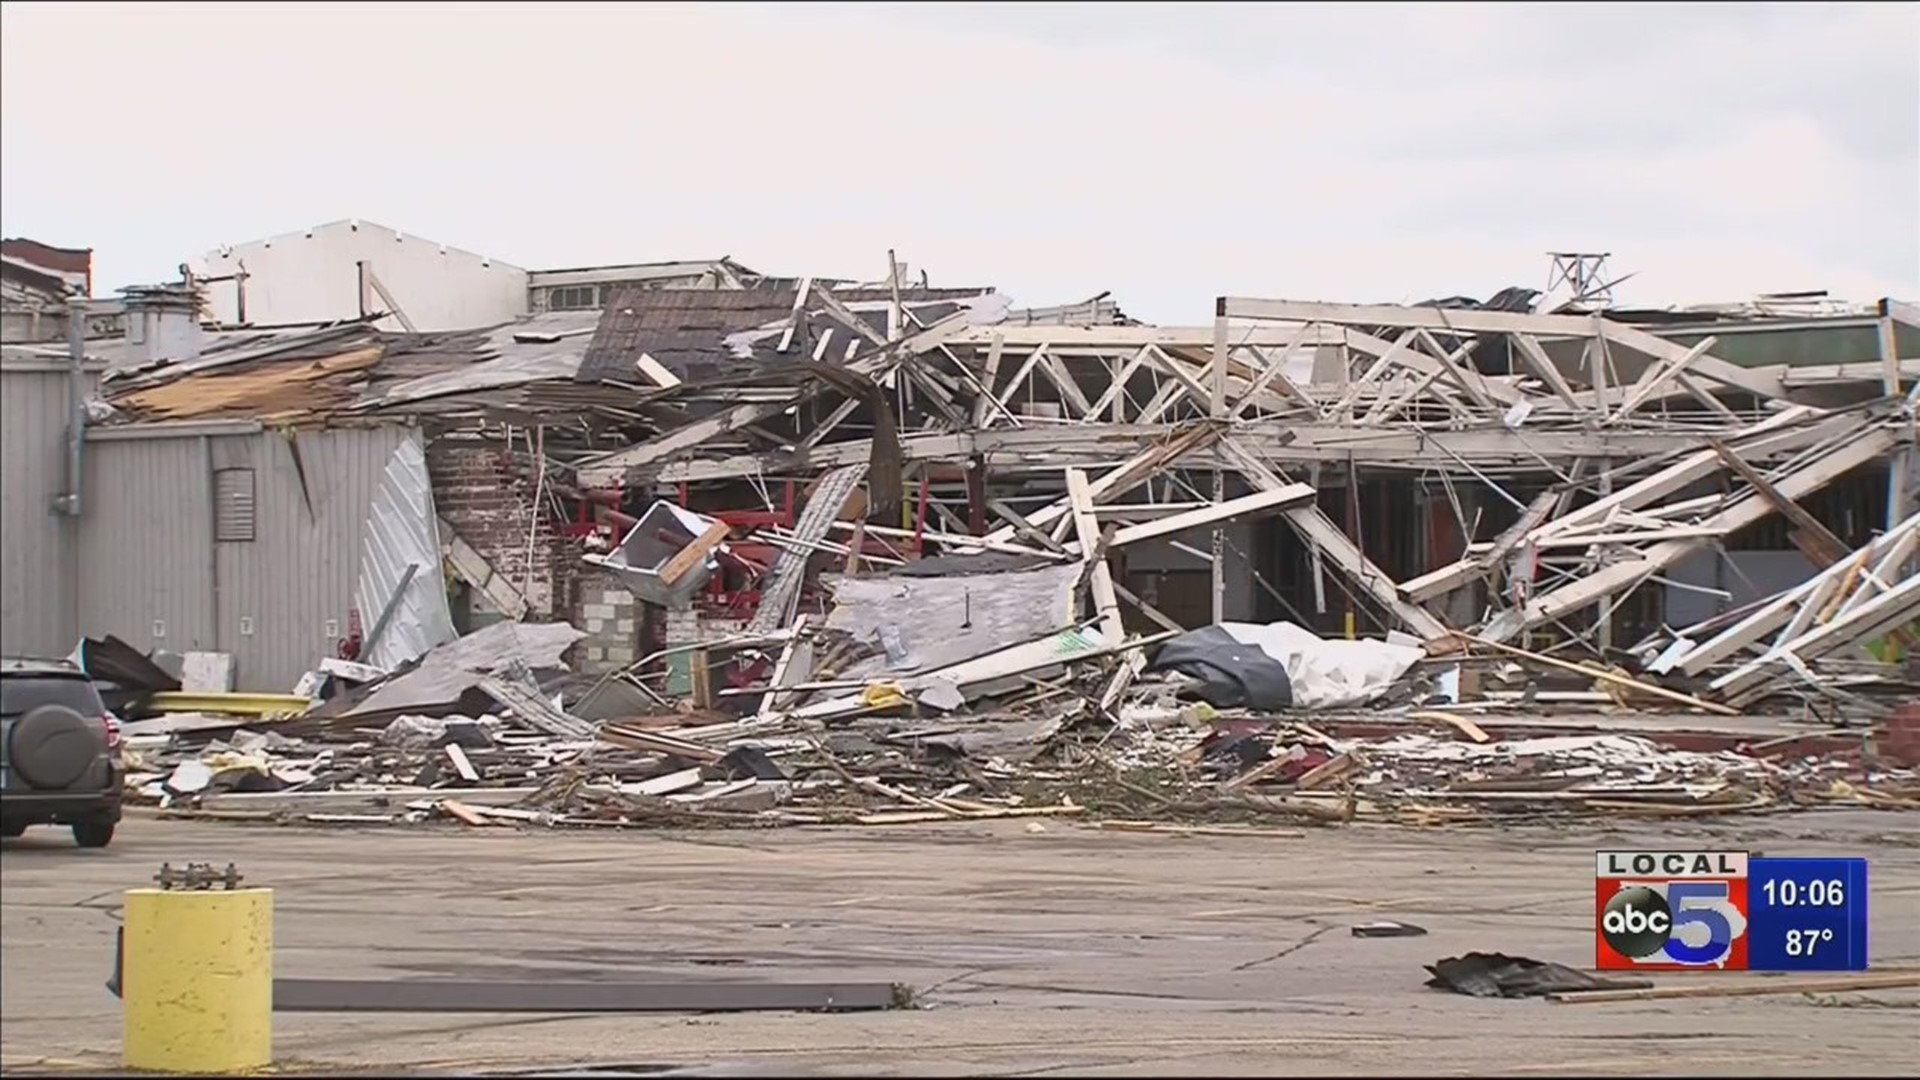 Marshalltown paramedic, tornado survivor look back one year after tornado